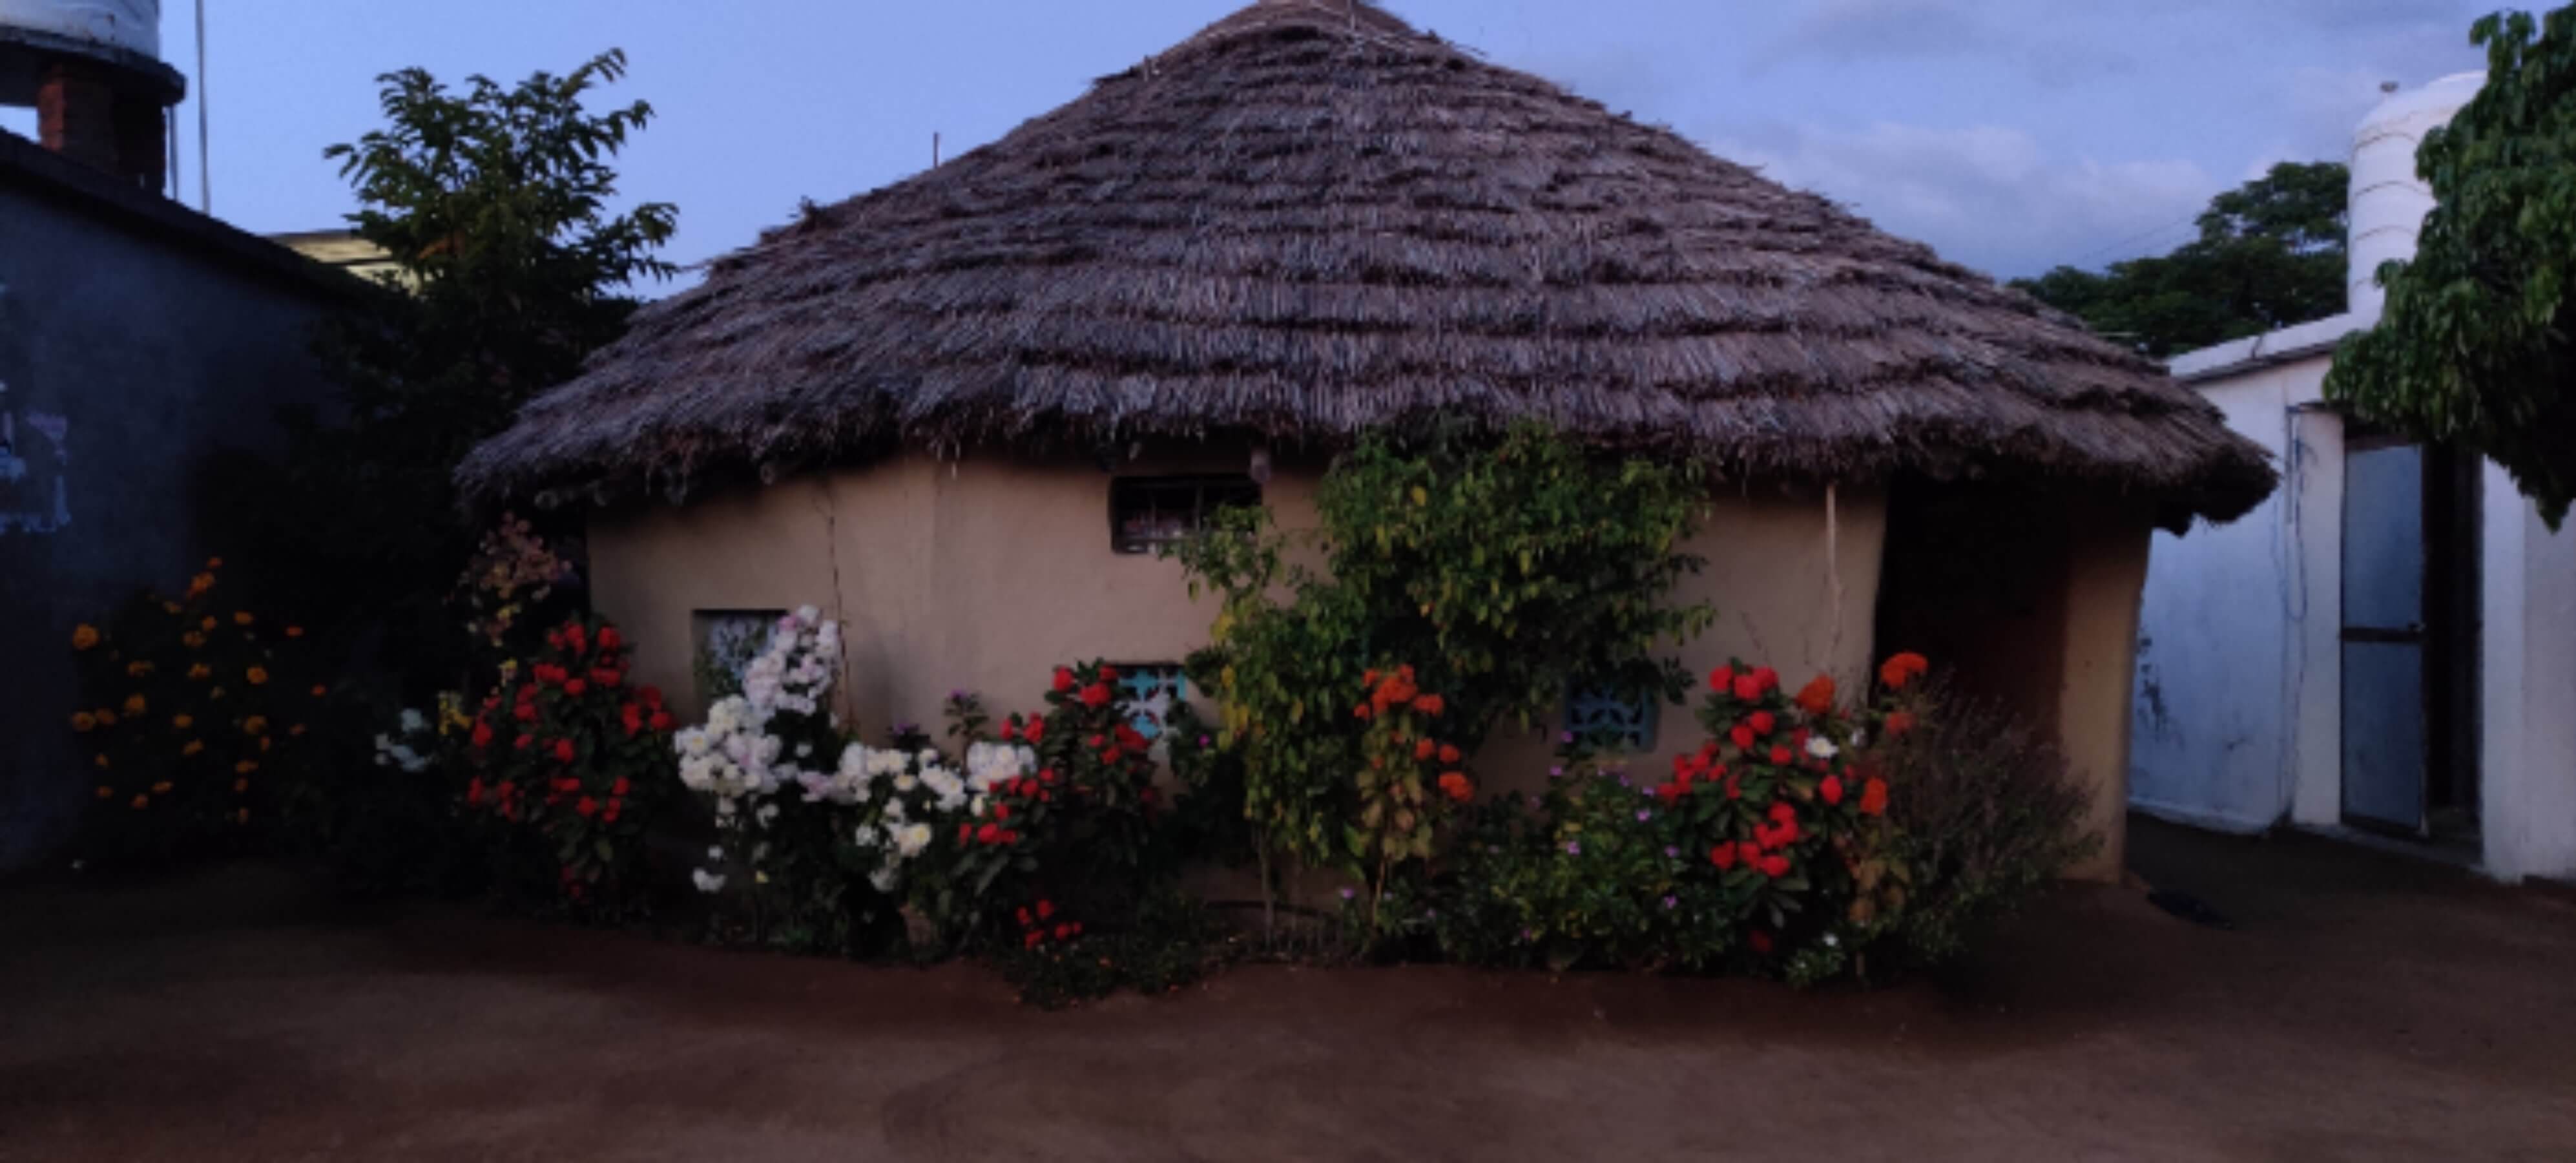 A Decorated Village Hut